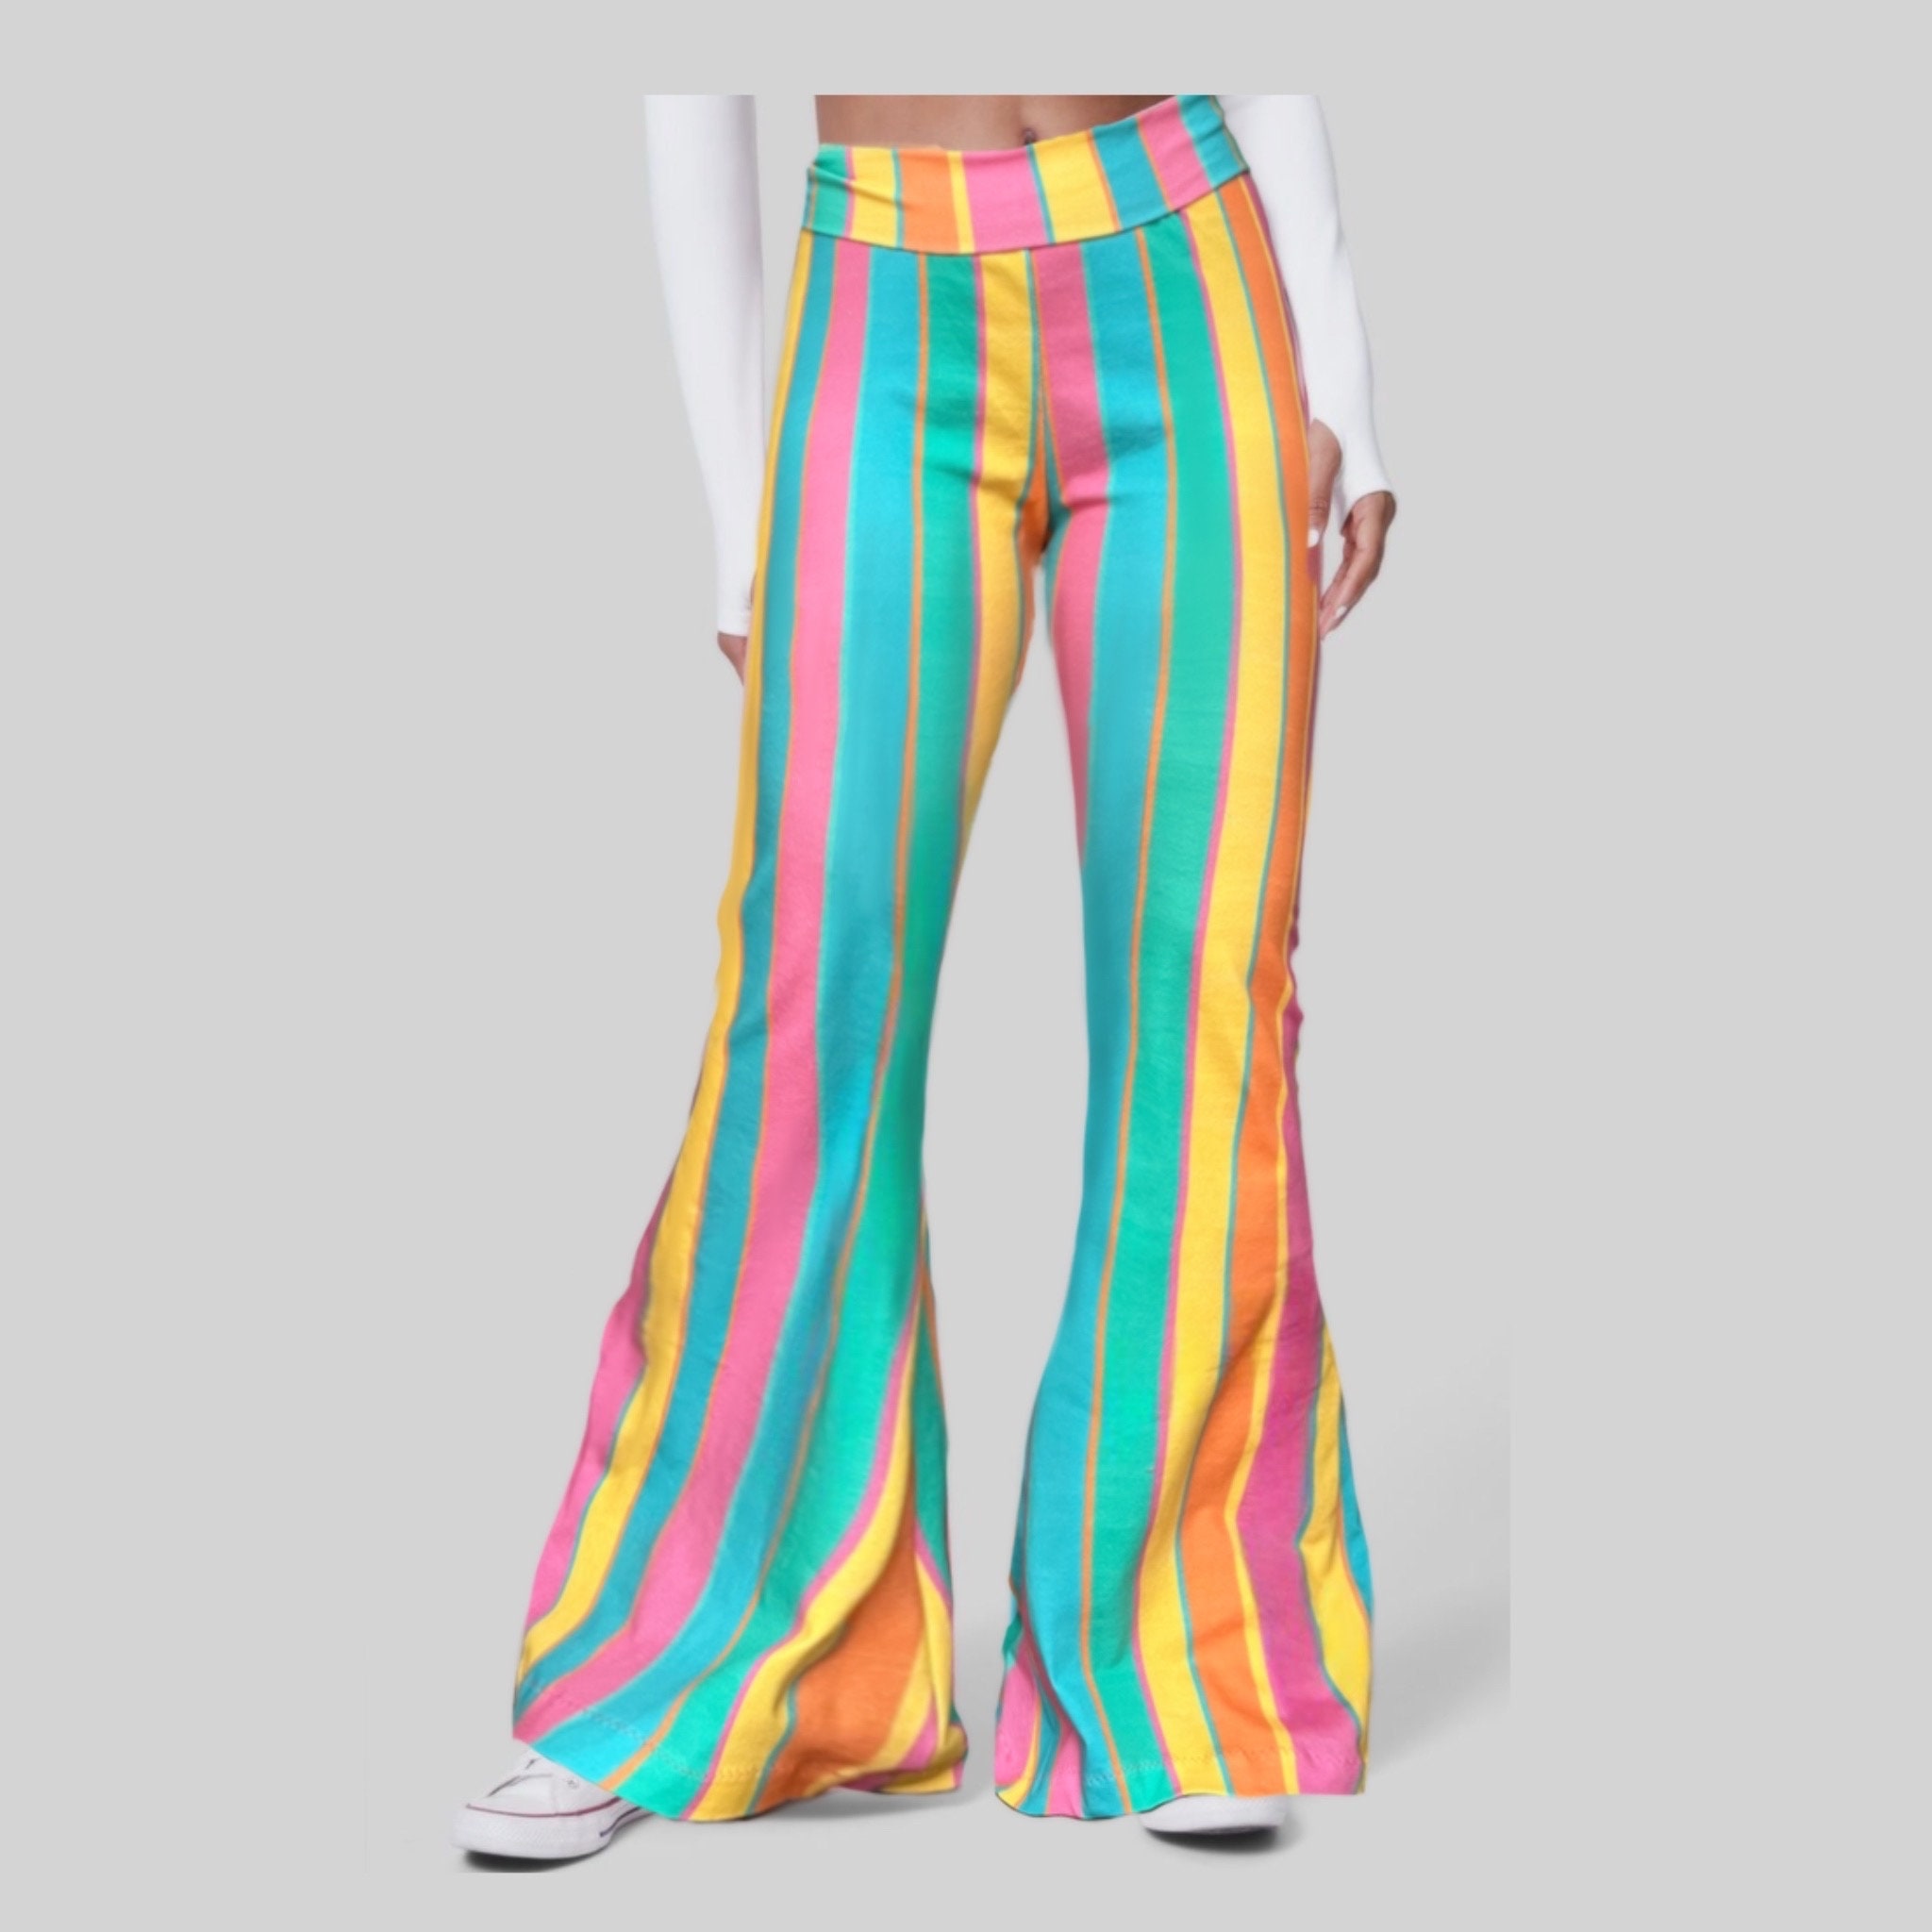 Bamboo Slim Bells x Snip Tease - 3 Colors  Wide leg yoga pants, Rave  outfits festivals, Bell pants